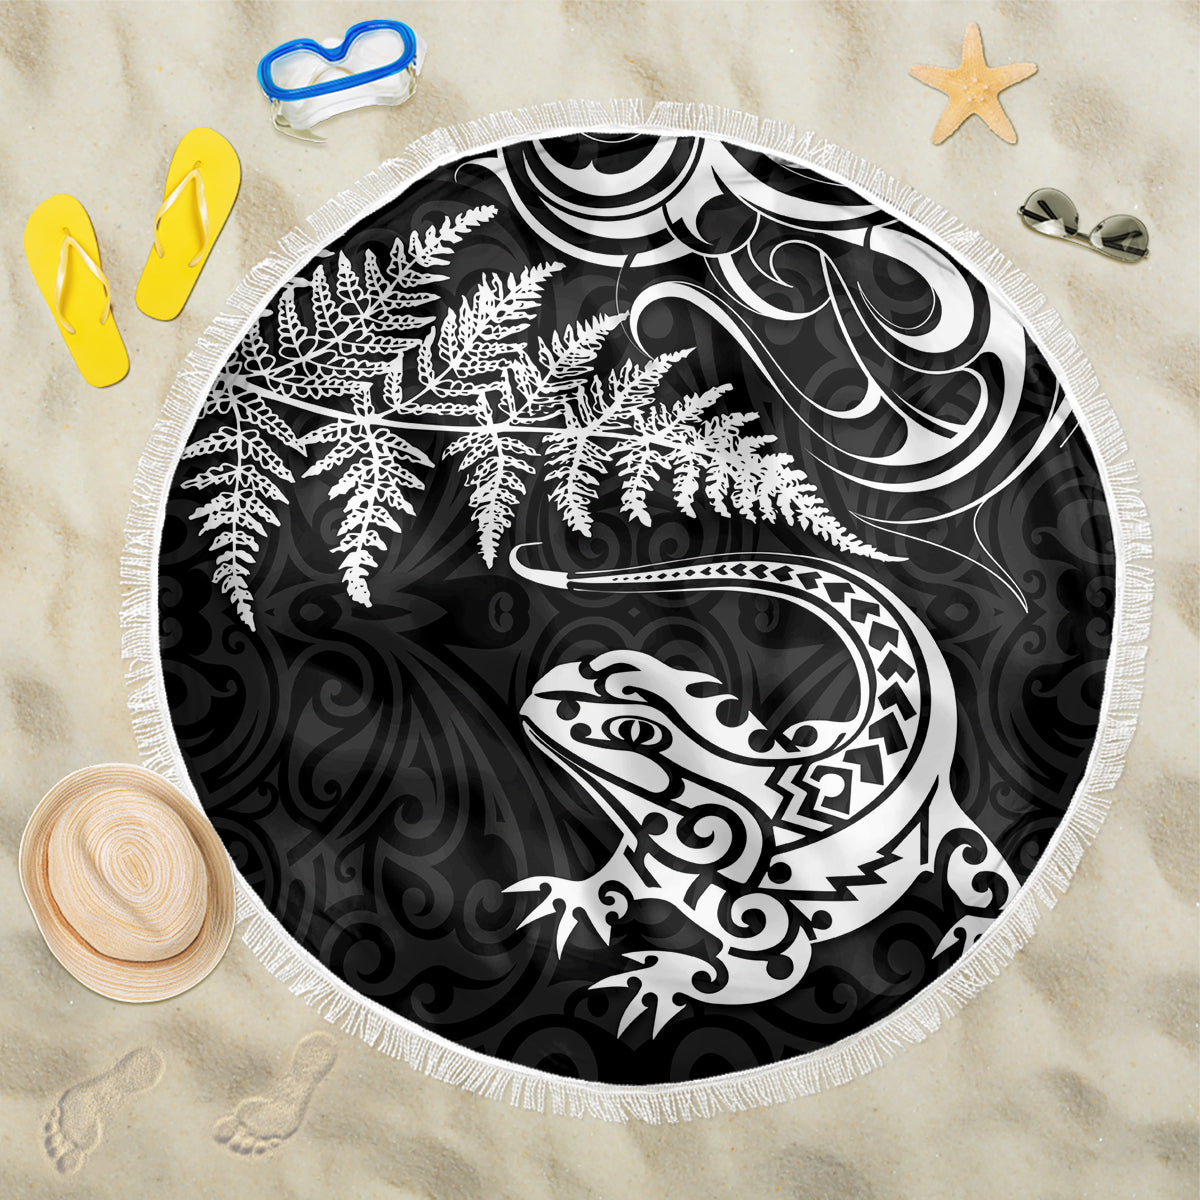 New Zealand Tuatara Tribal Tattoo Beach Blanket Silver Fern and Maori Pattern Black Color